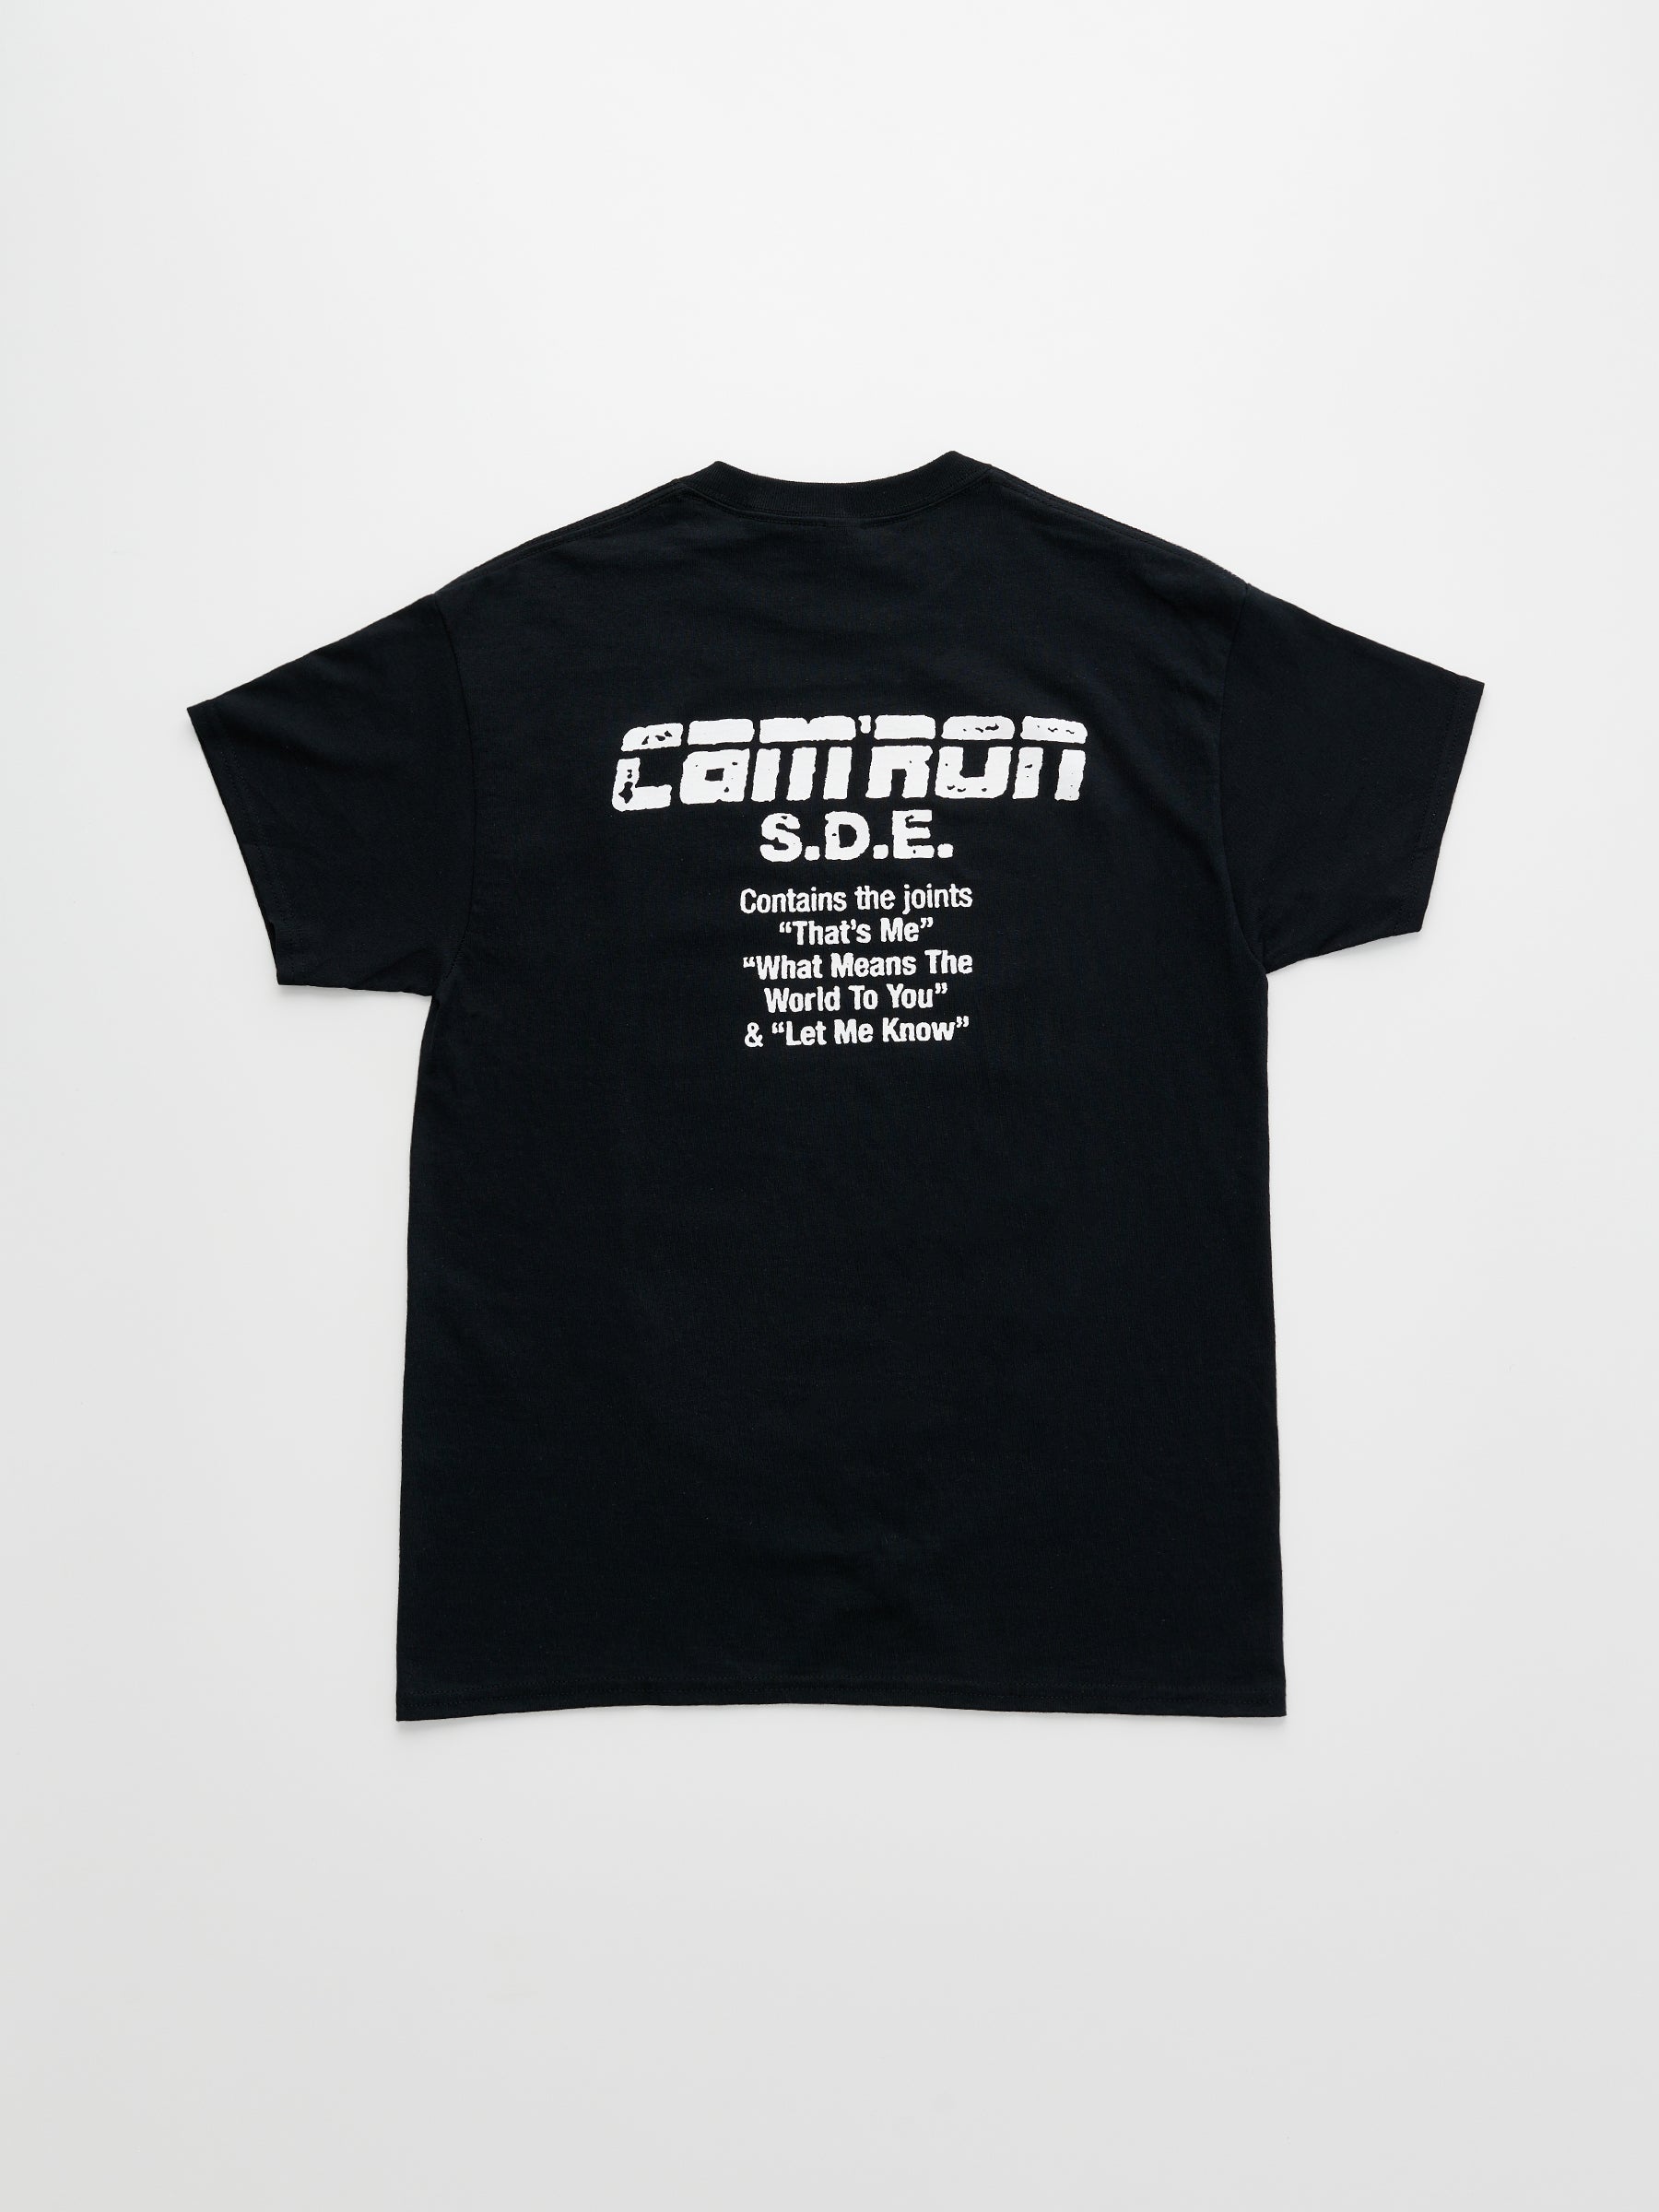 Fraser Croll Cam’ron T-Shirt Black